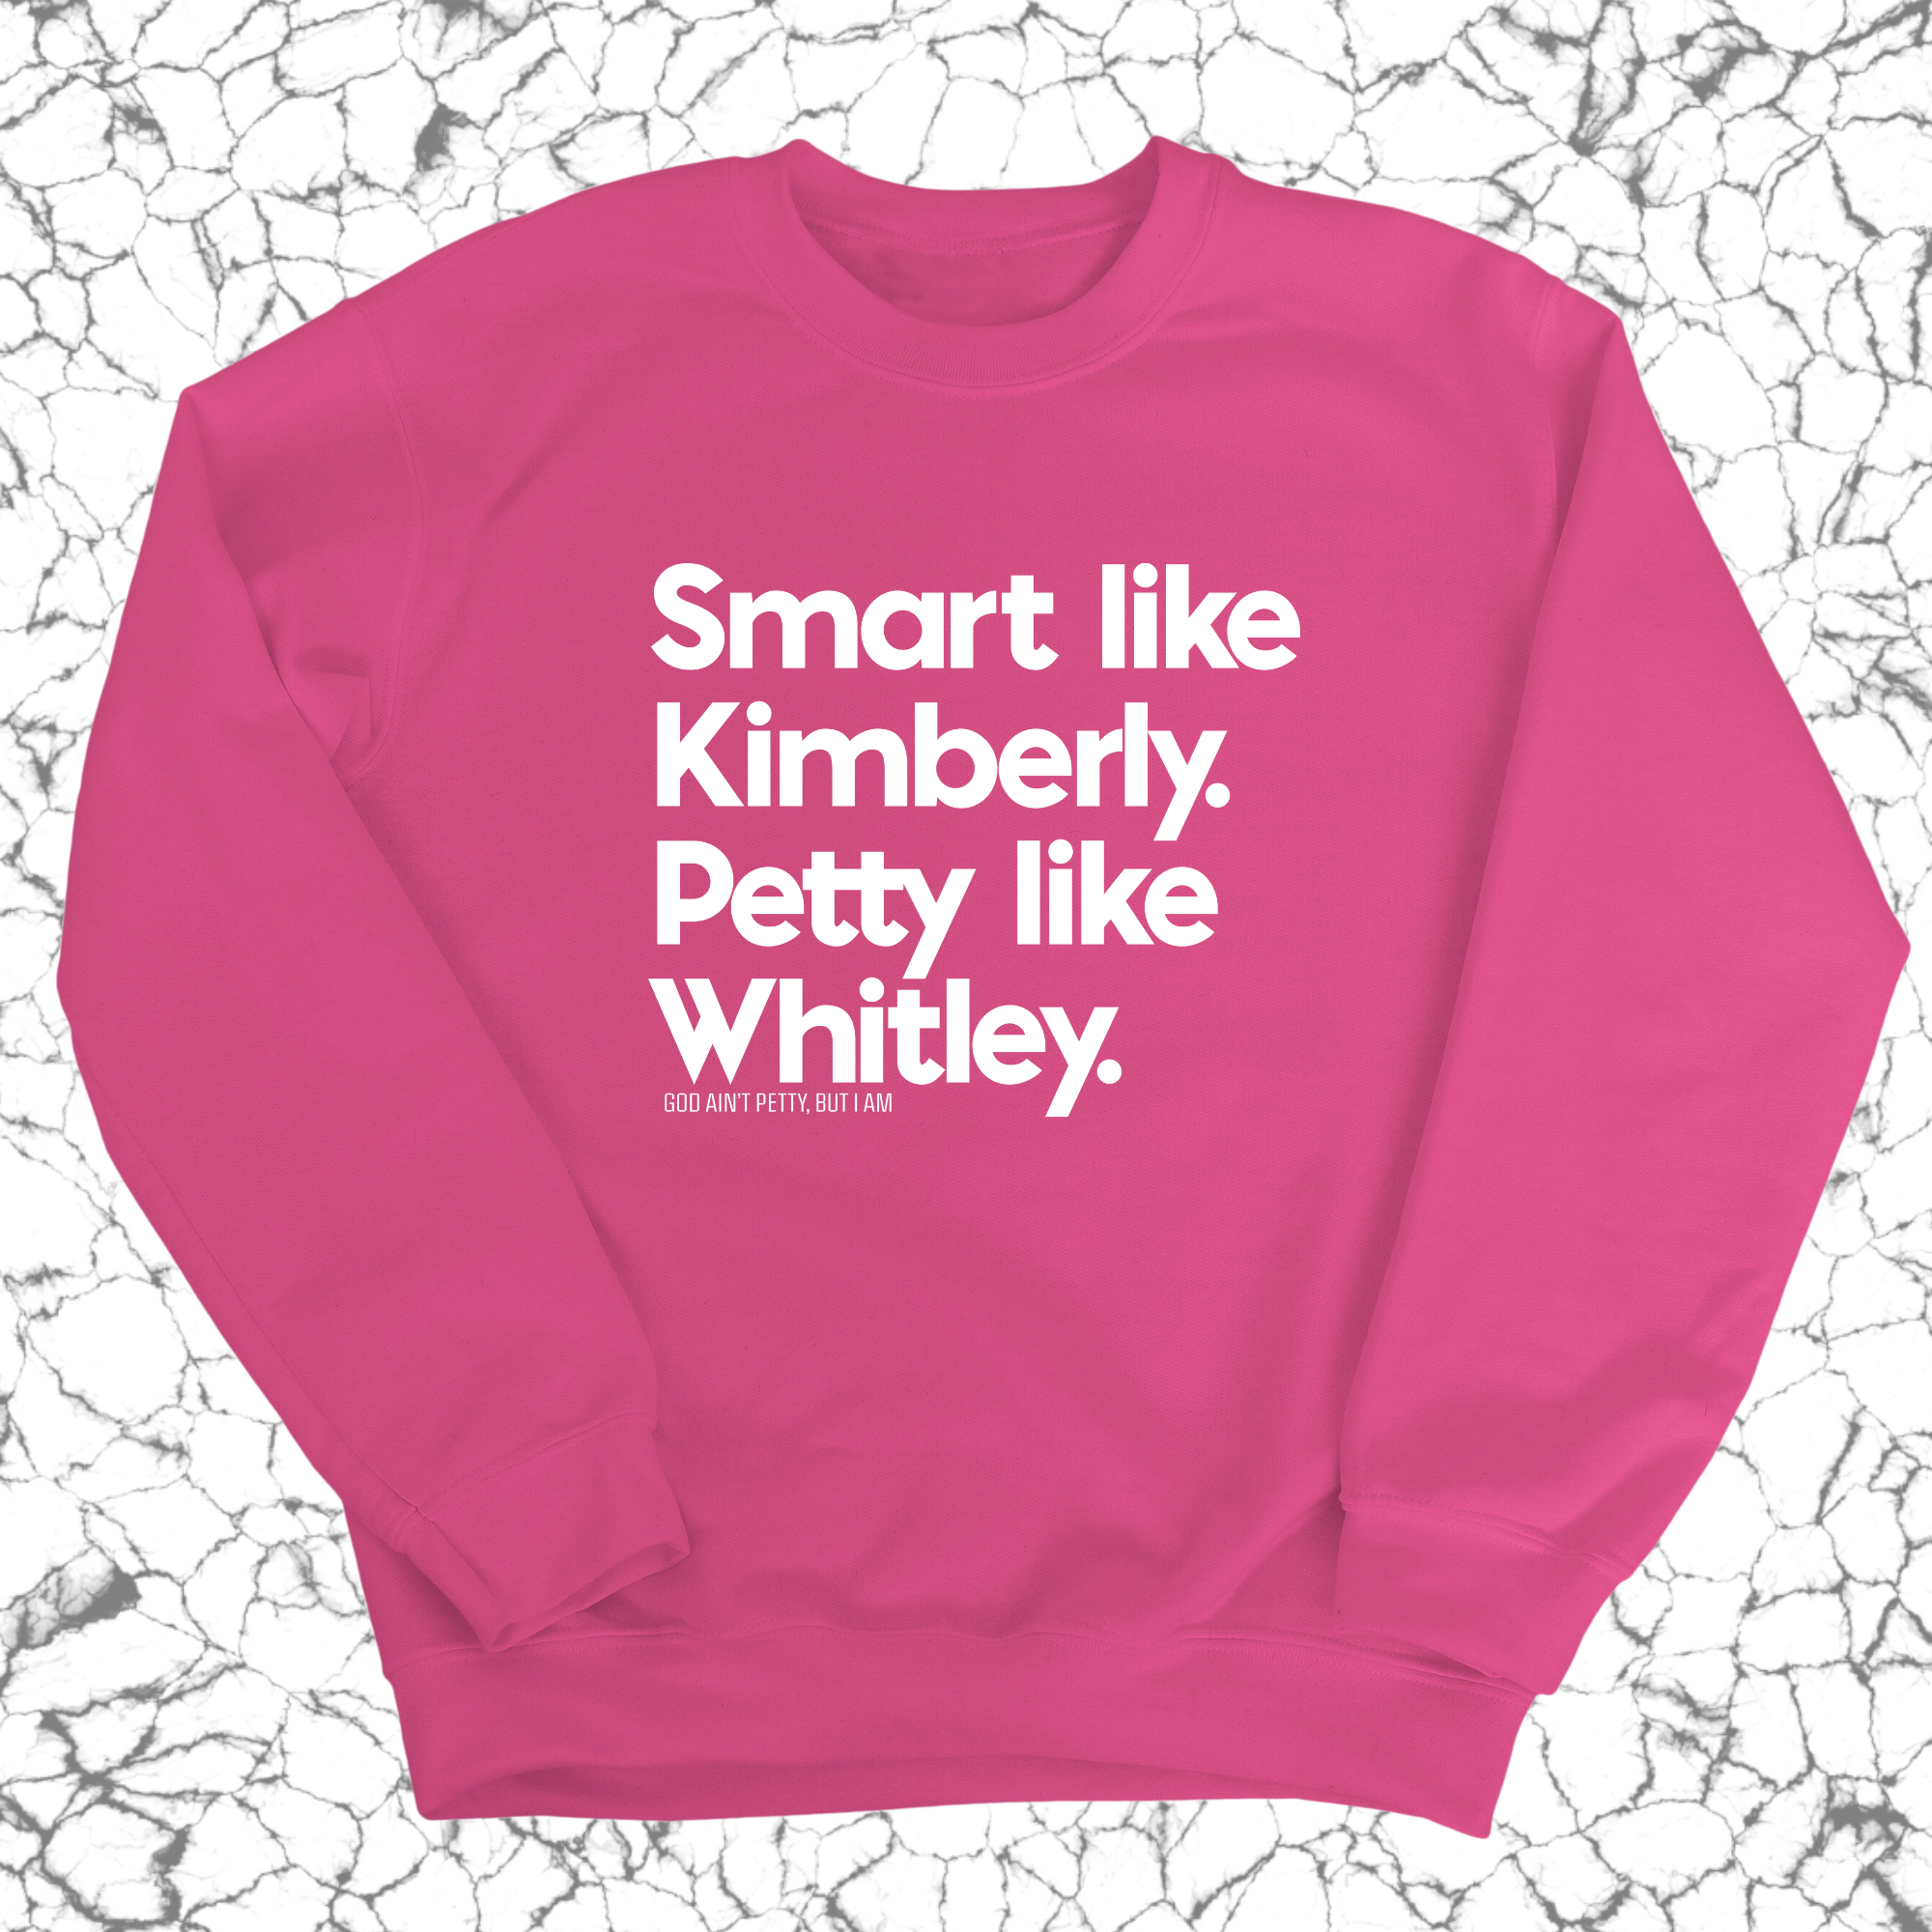 Smart like Kimberly. Petty like Whitley Unisex Sweatshirt-Sweatshirt-The Original God Ain't Petty But I Am